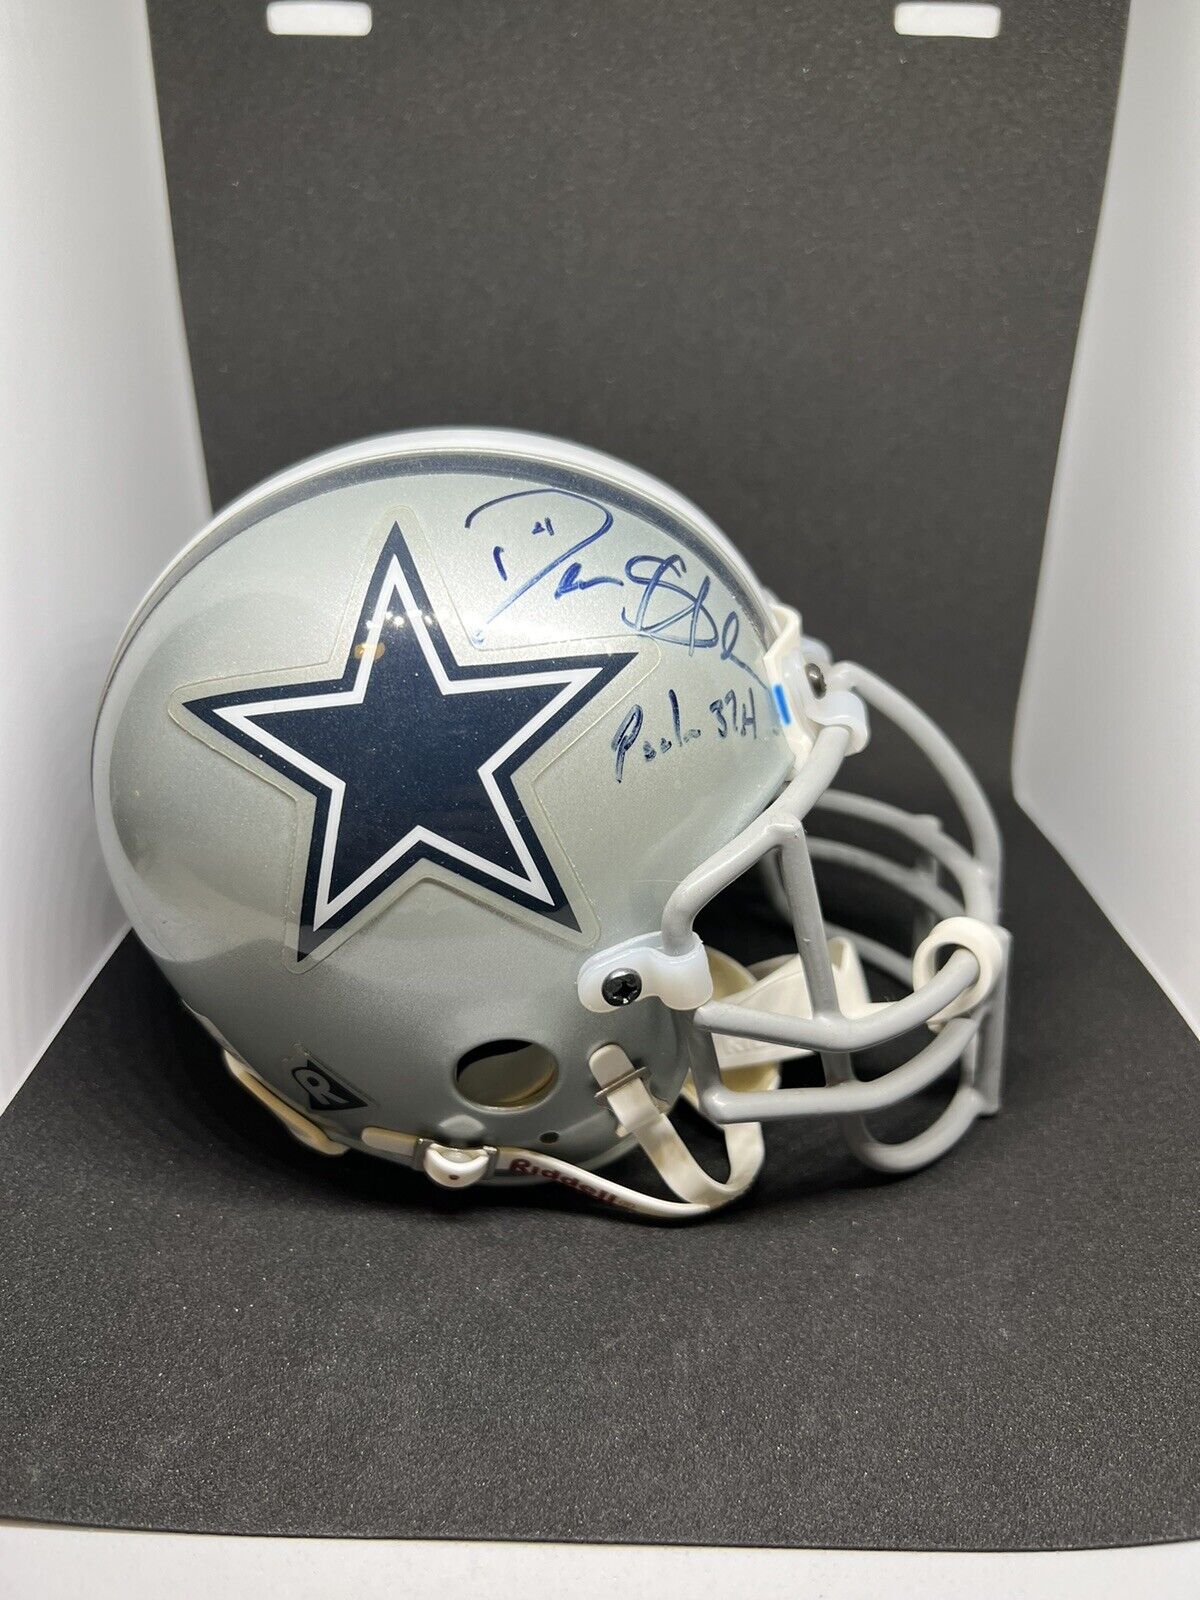 Deion Sanders Signed Mini Helmet w/ Rare Inscriptions - Dallas Cowboys